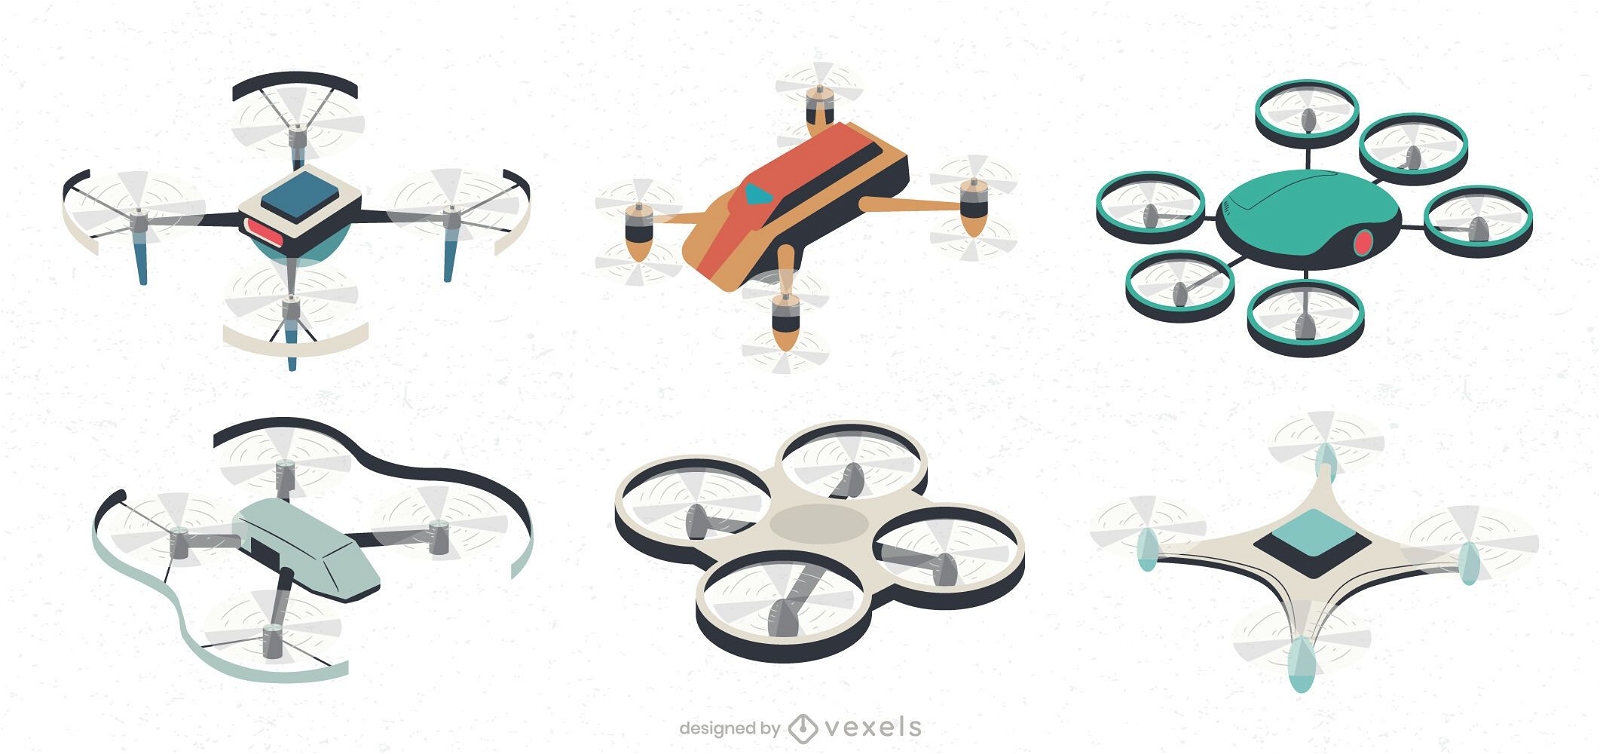 UAV-Drohnen-Illustrationsset